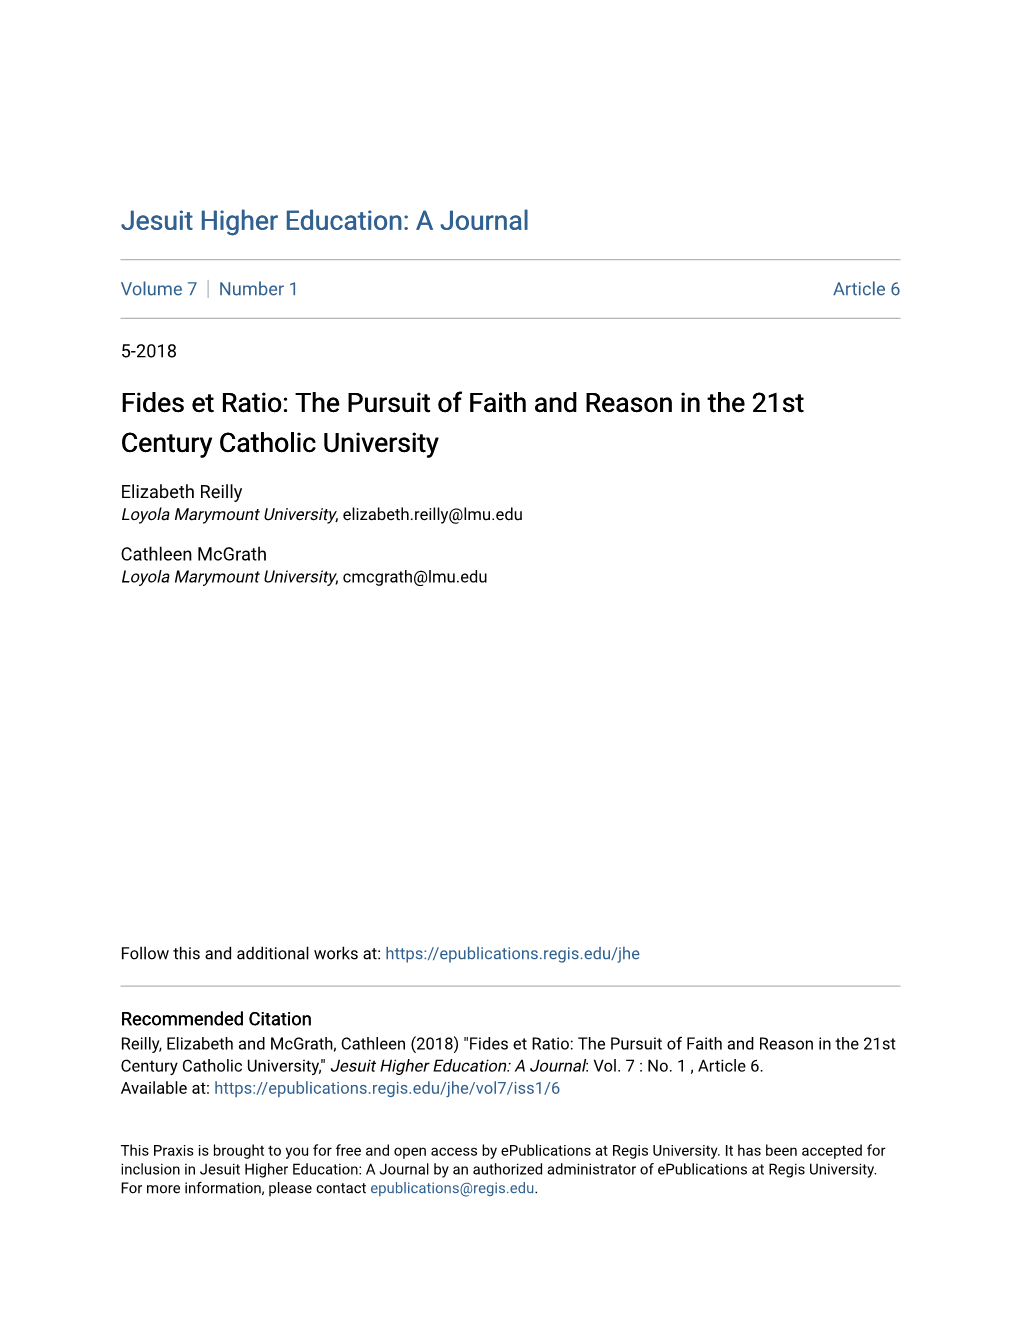 Fides Et Ratio: the Pursuit of Faith and Reason in the 21St Century Catholic University